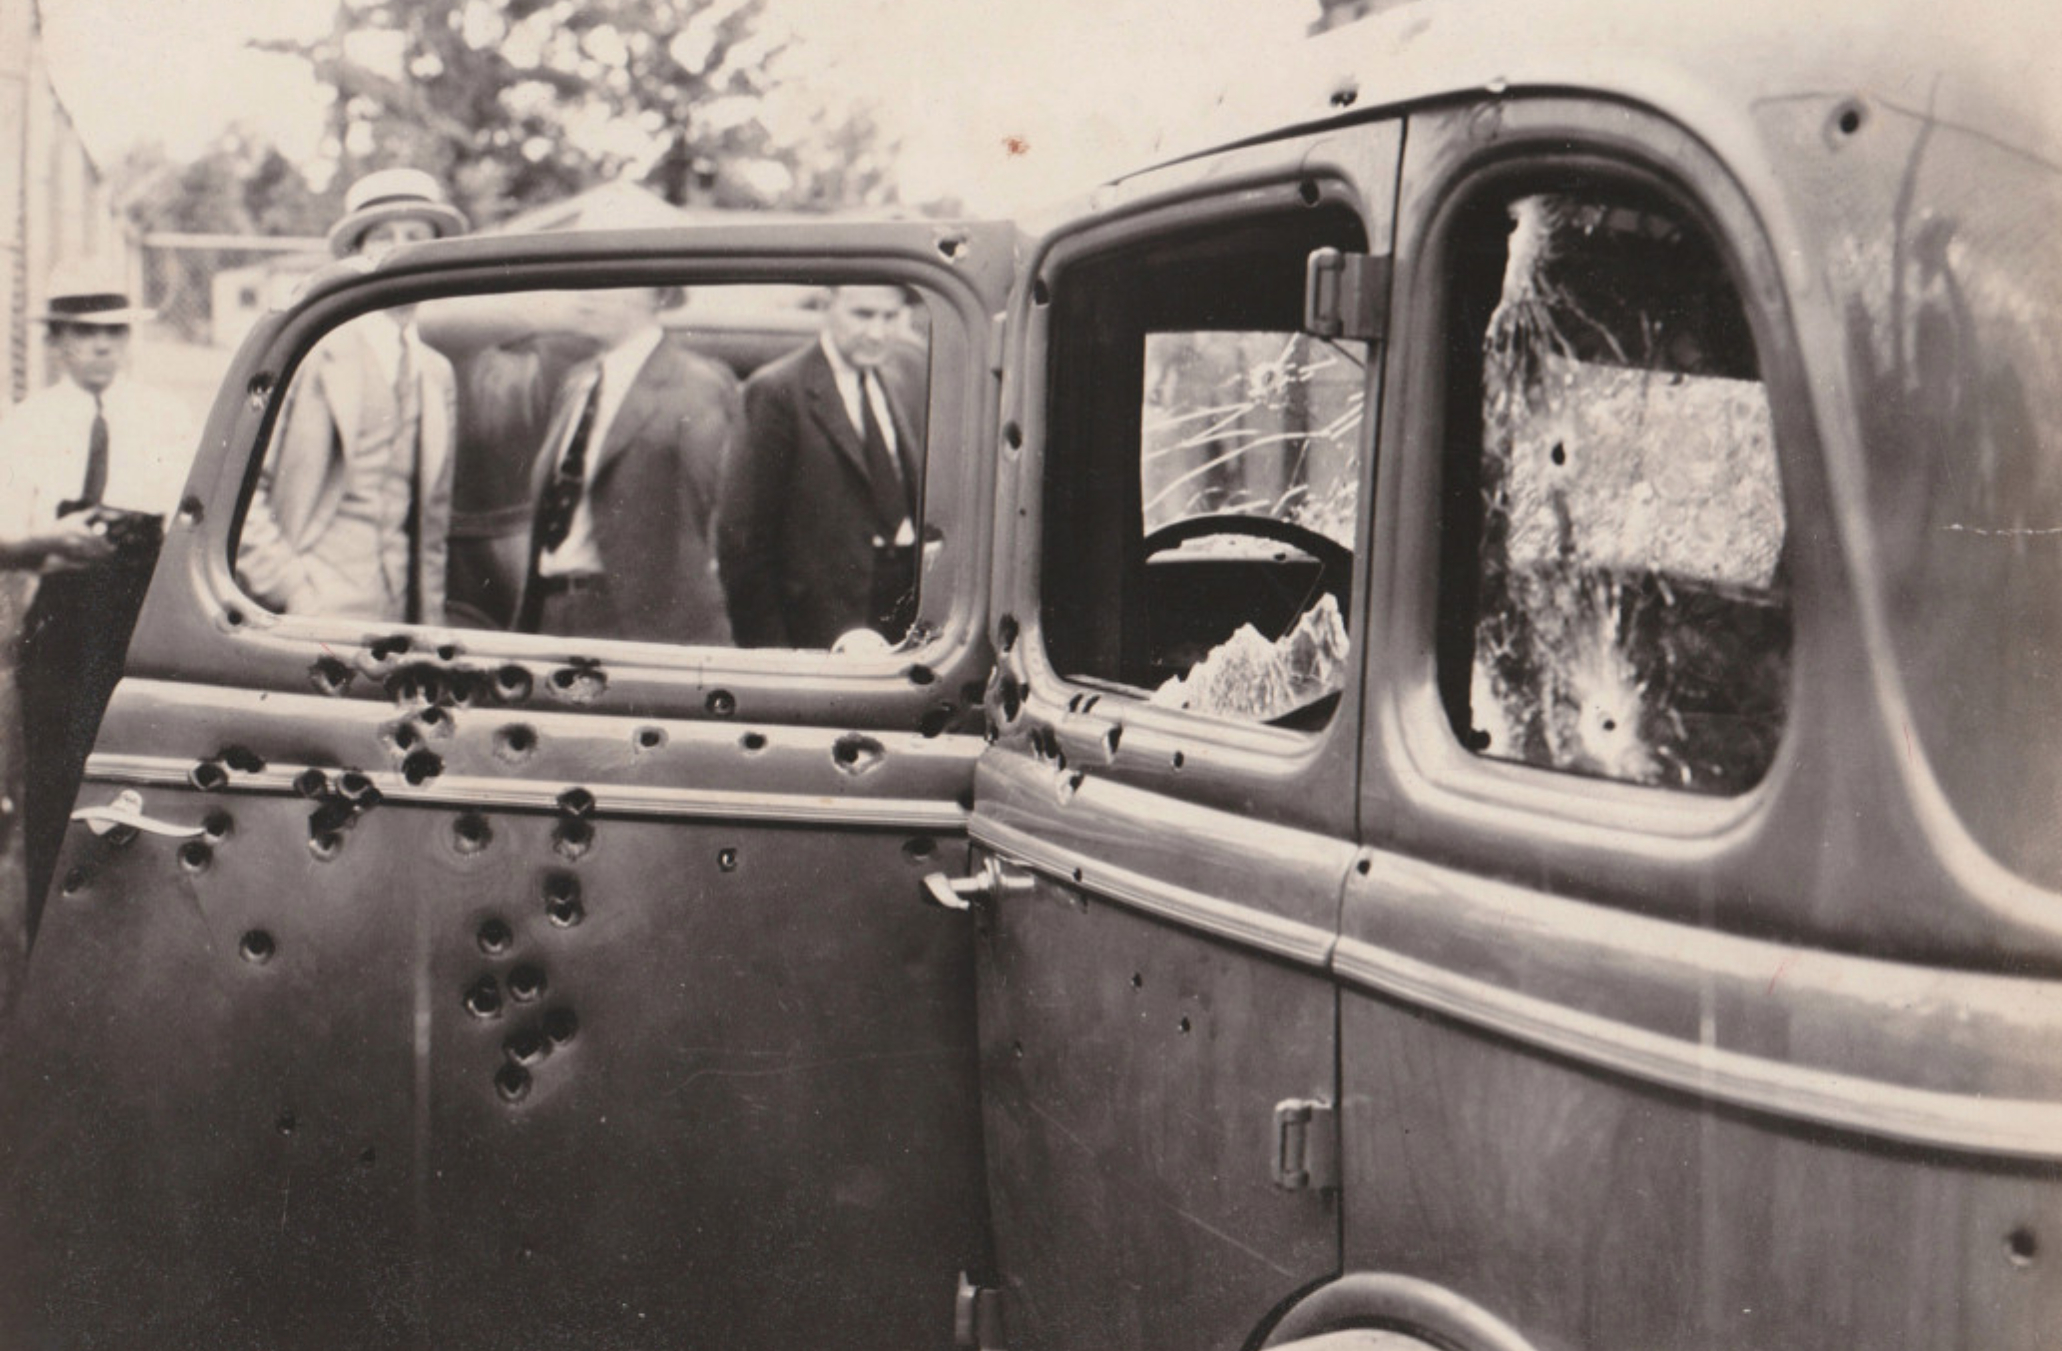 Bonnie and Clyde: Η αληθινή ιστορία των κακοποιών που τρομοκράτησε μία ολόκληρη χώρα